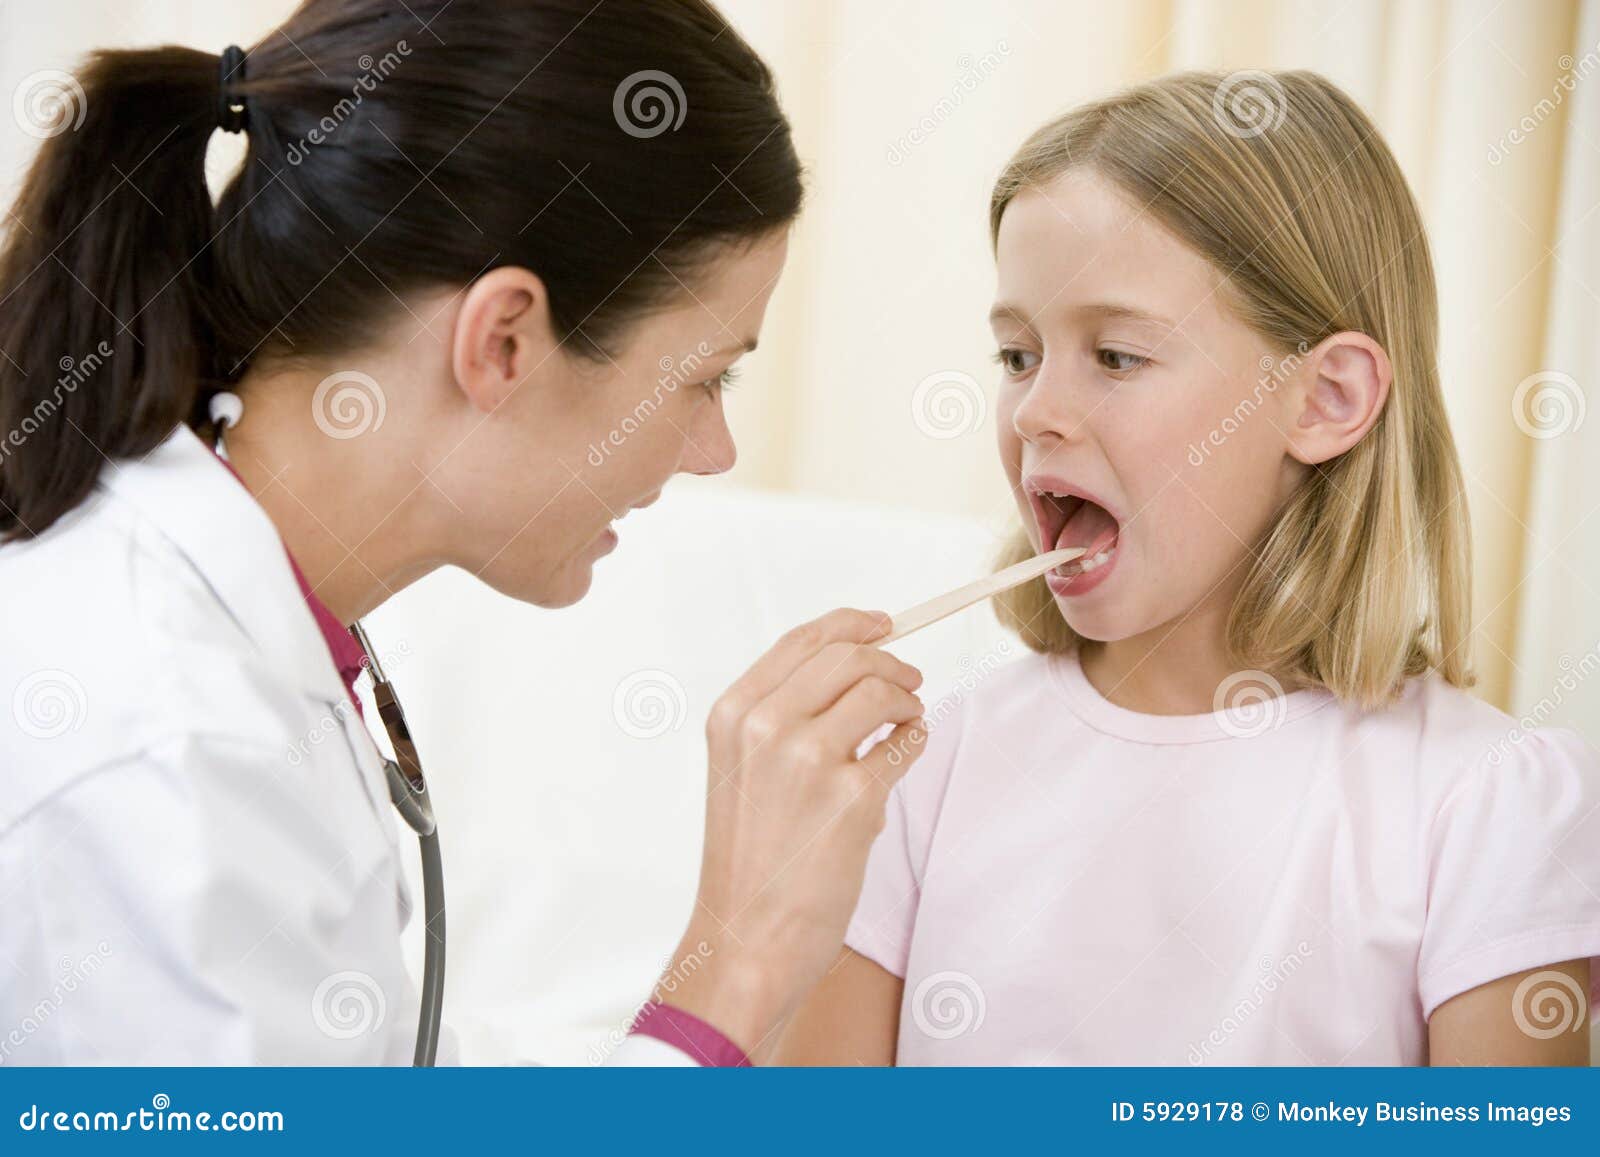 doctor giving checkup to young girl